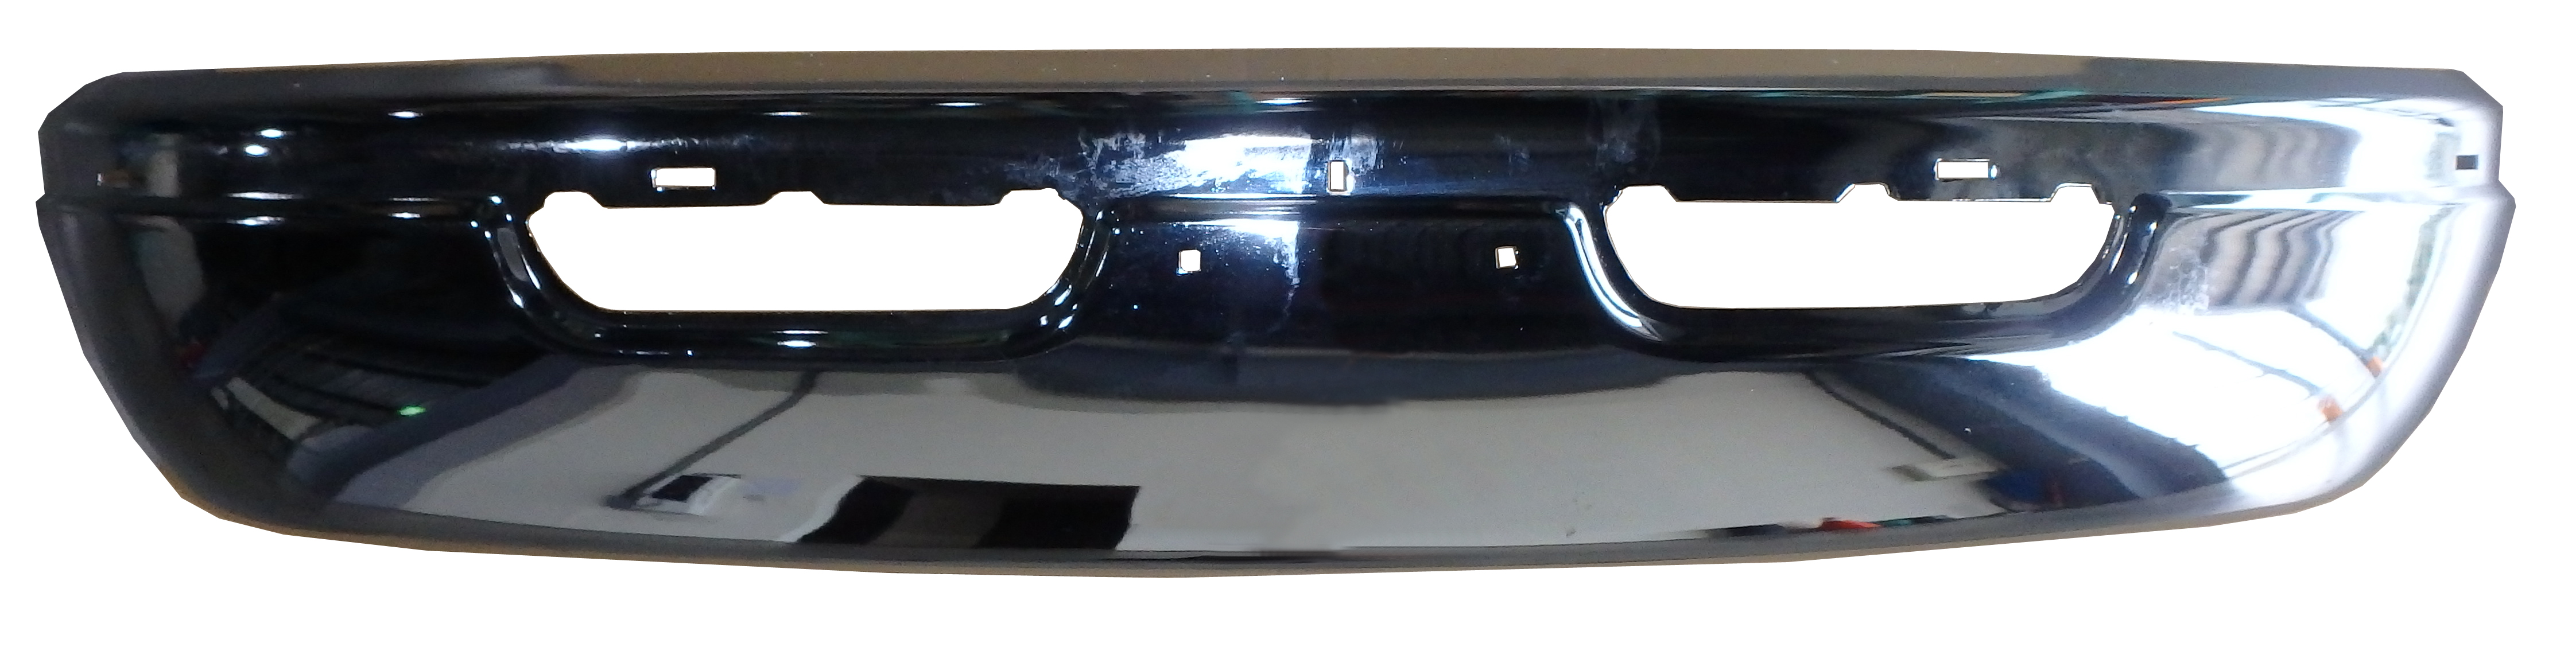 Aftermarket METAL FRONT BUMPERS for DODGE - B3500, B3500,98-98,Front bumper face bar